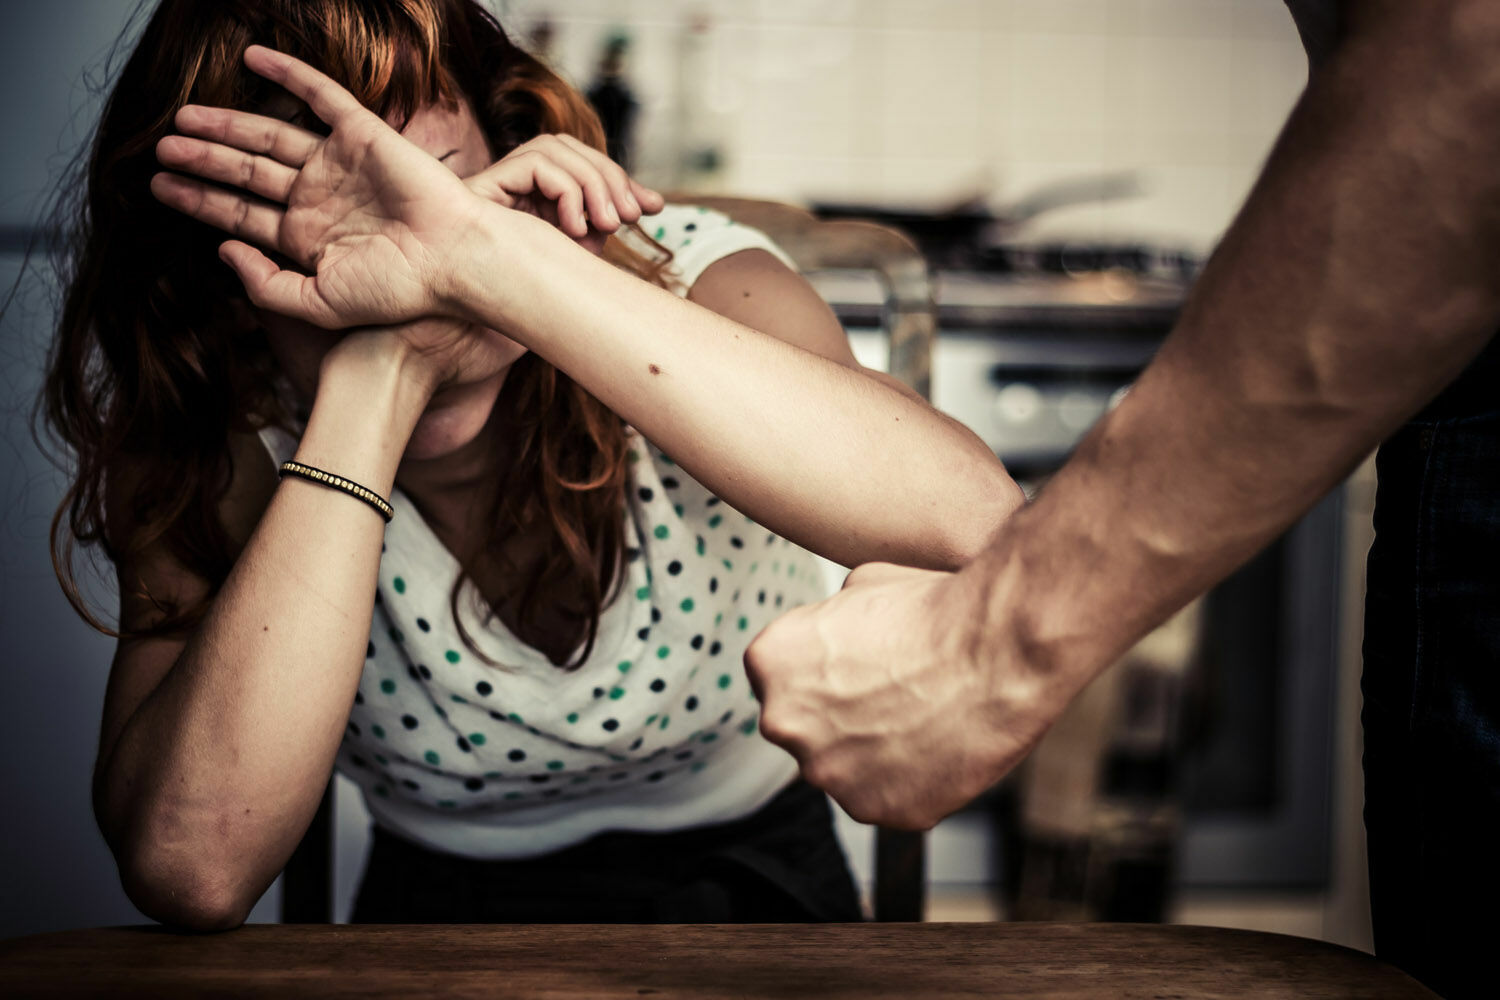 Деваться некуда: жертвам домашнего насилия во время карантина особенно тяжело